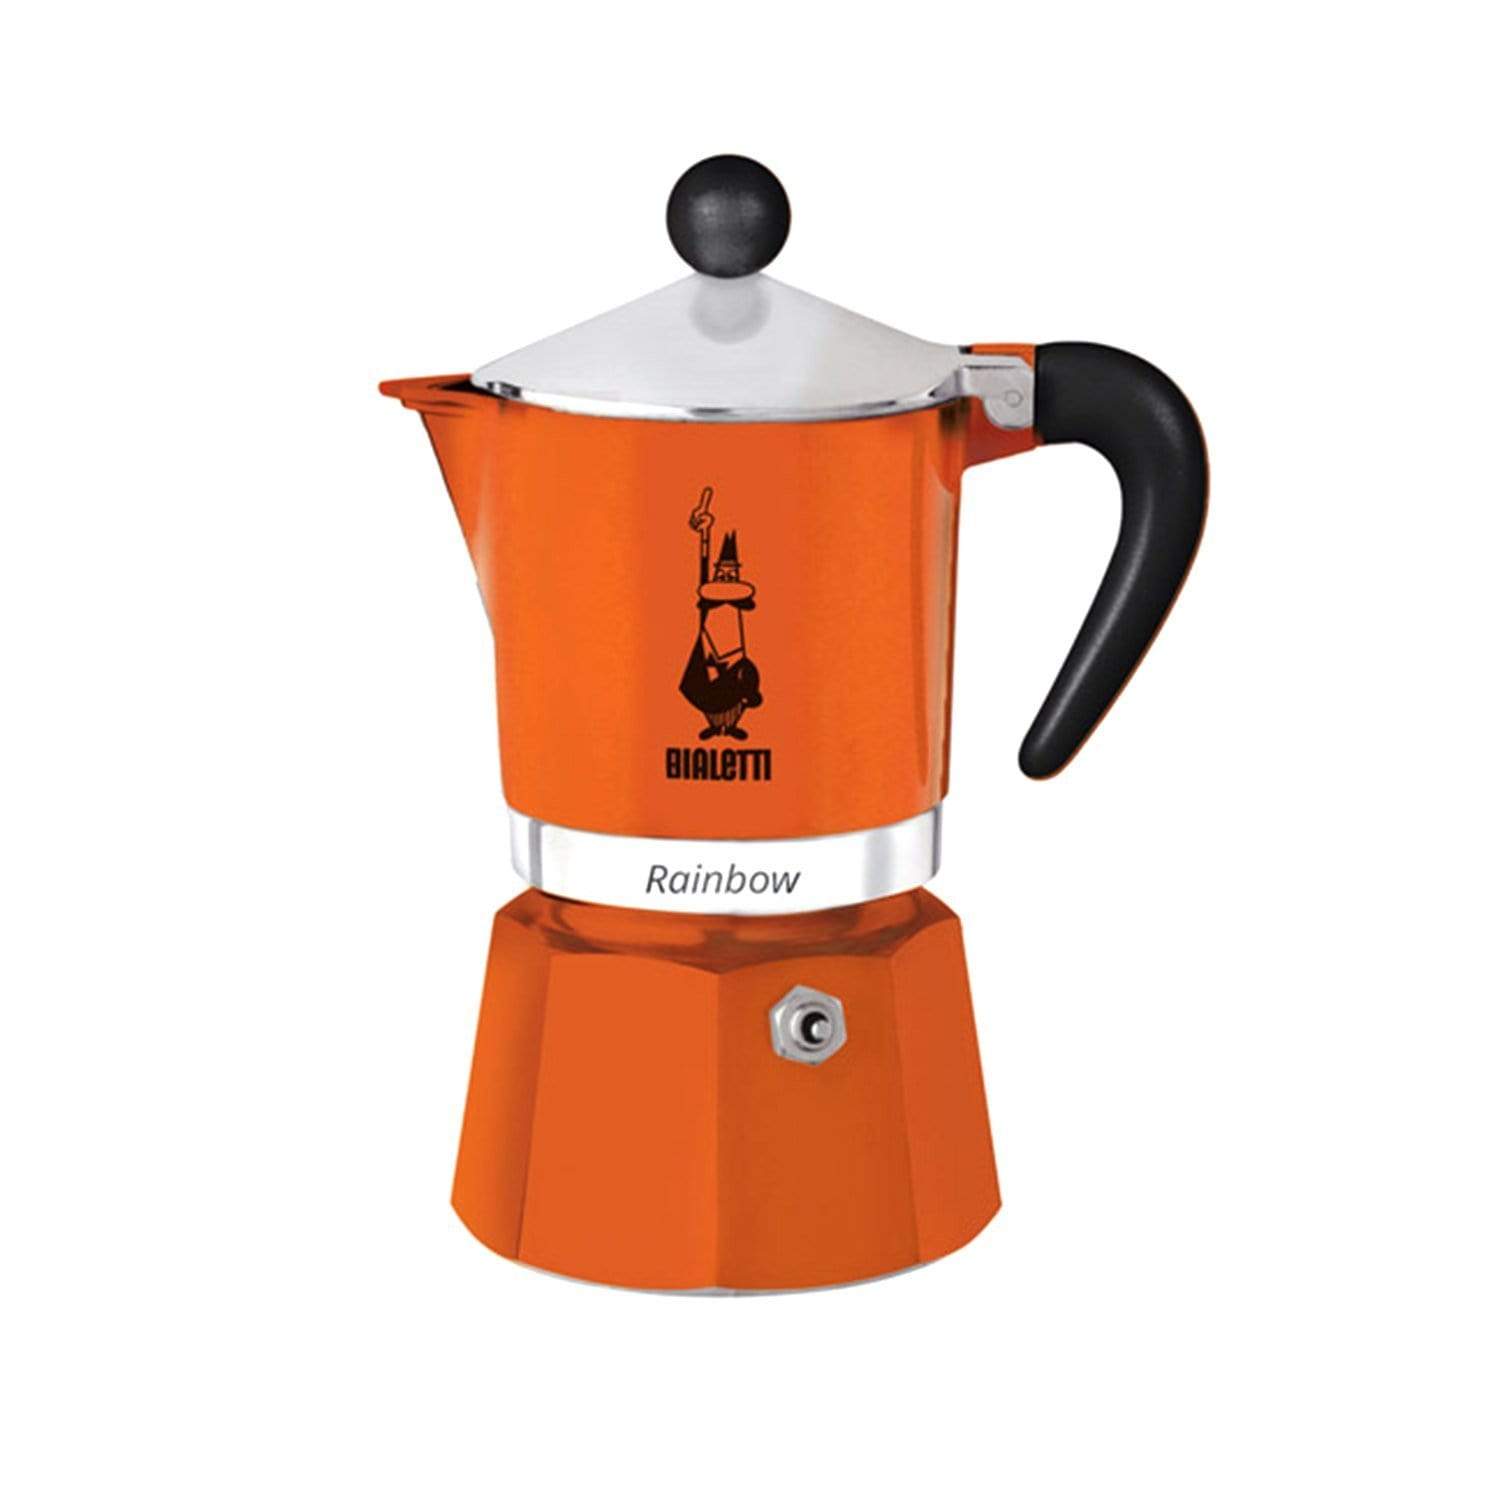 Bialetti Rainbow Coffee Maker - Orange, 3 Cups - 4992 - Jashanmal Home